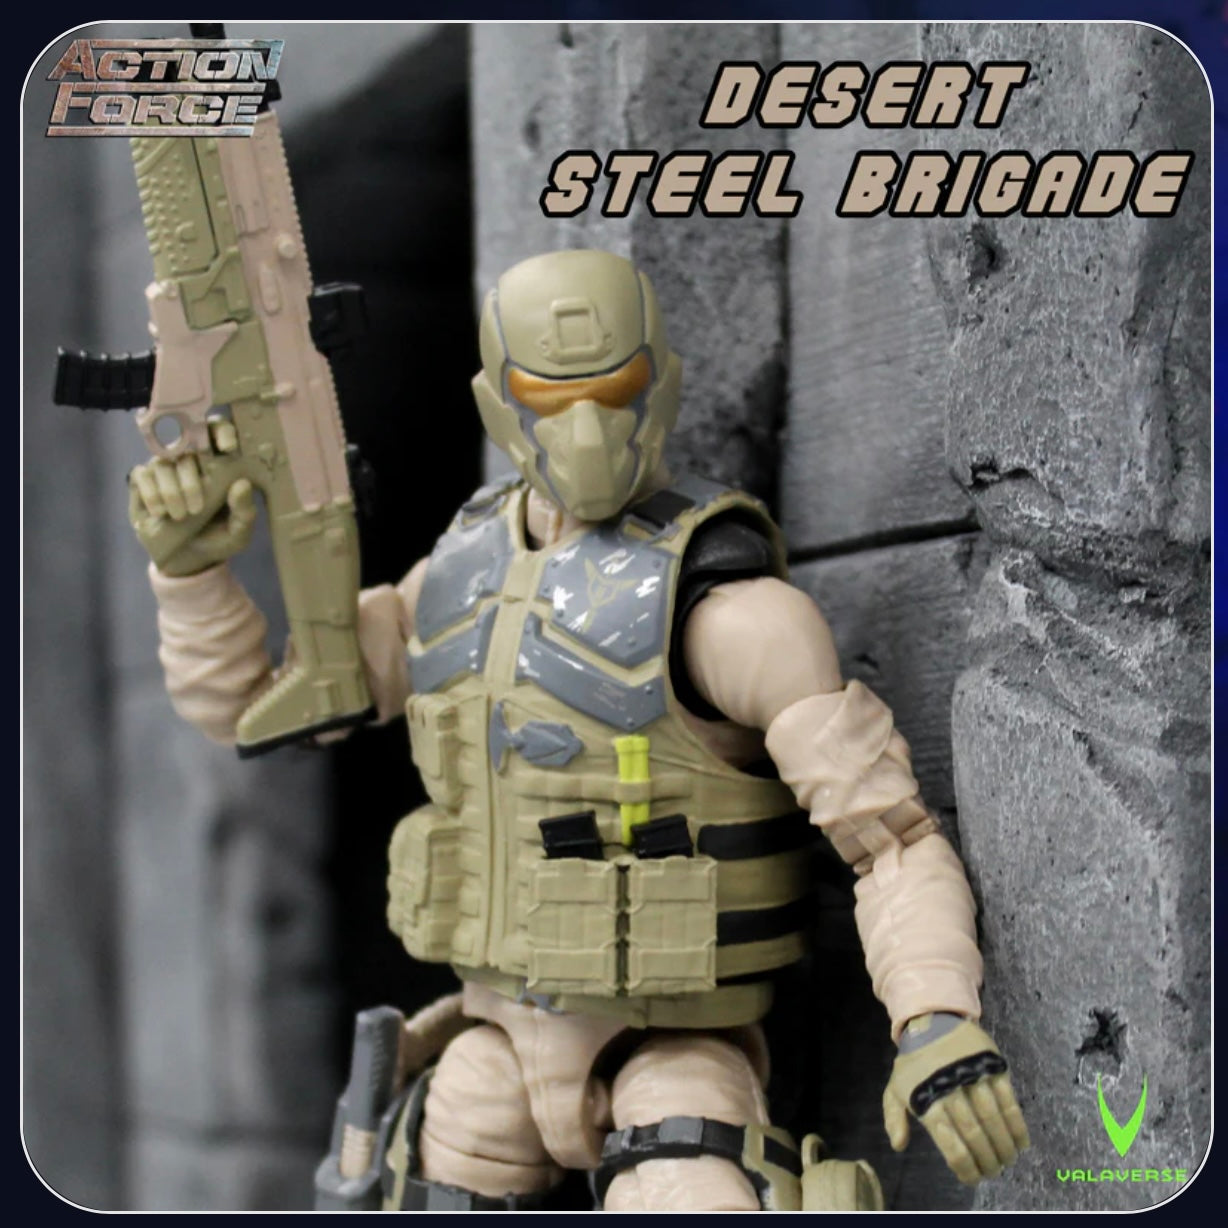 PRE-ORDER** Valaverse Action Force Series 4: Desert Steel Brigade